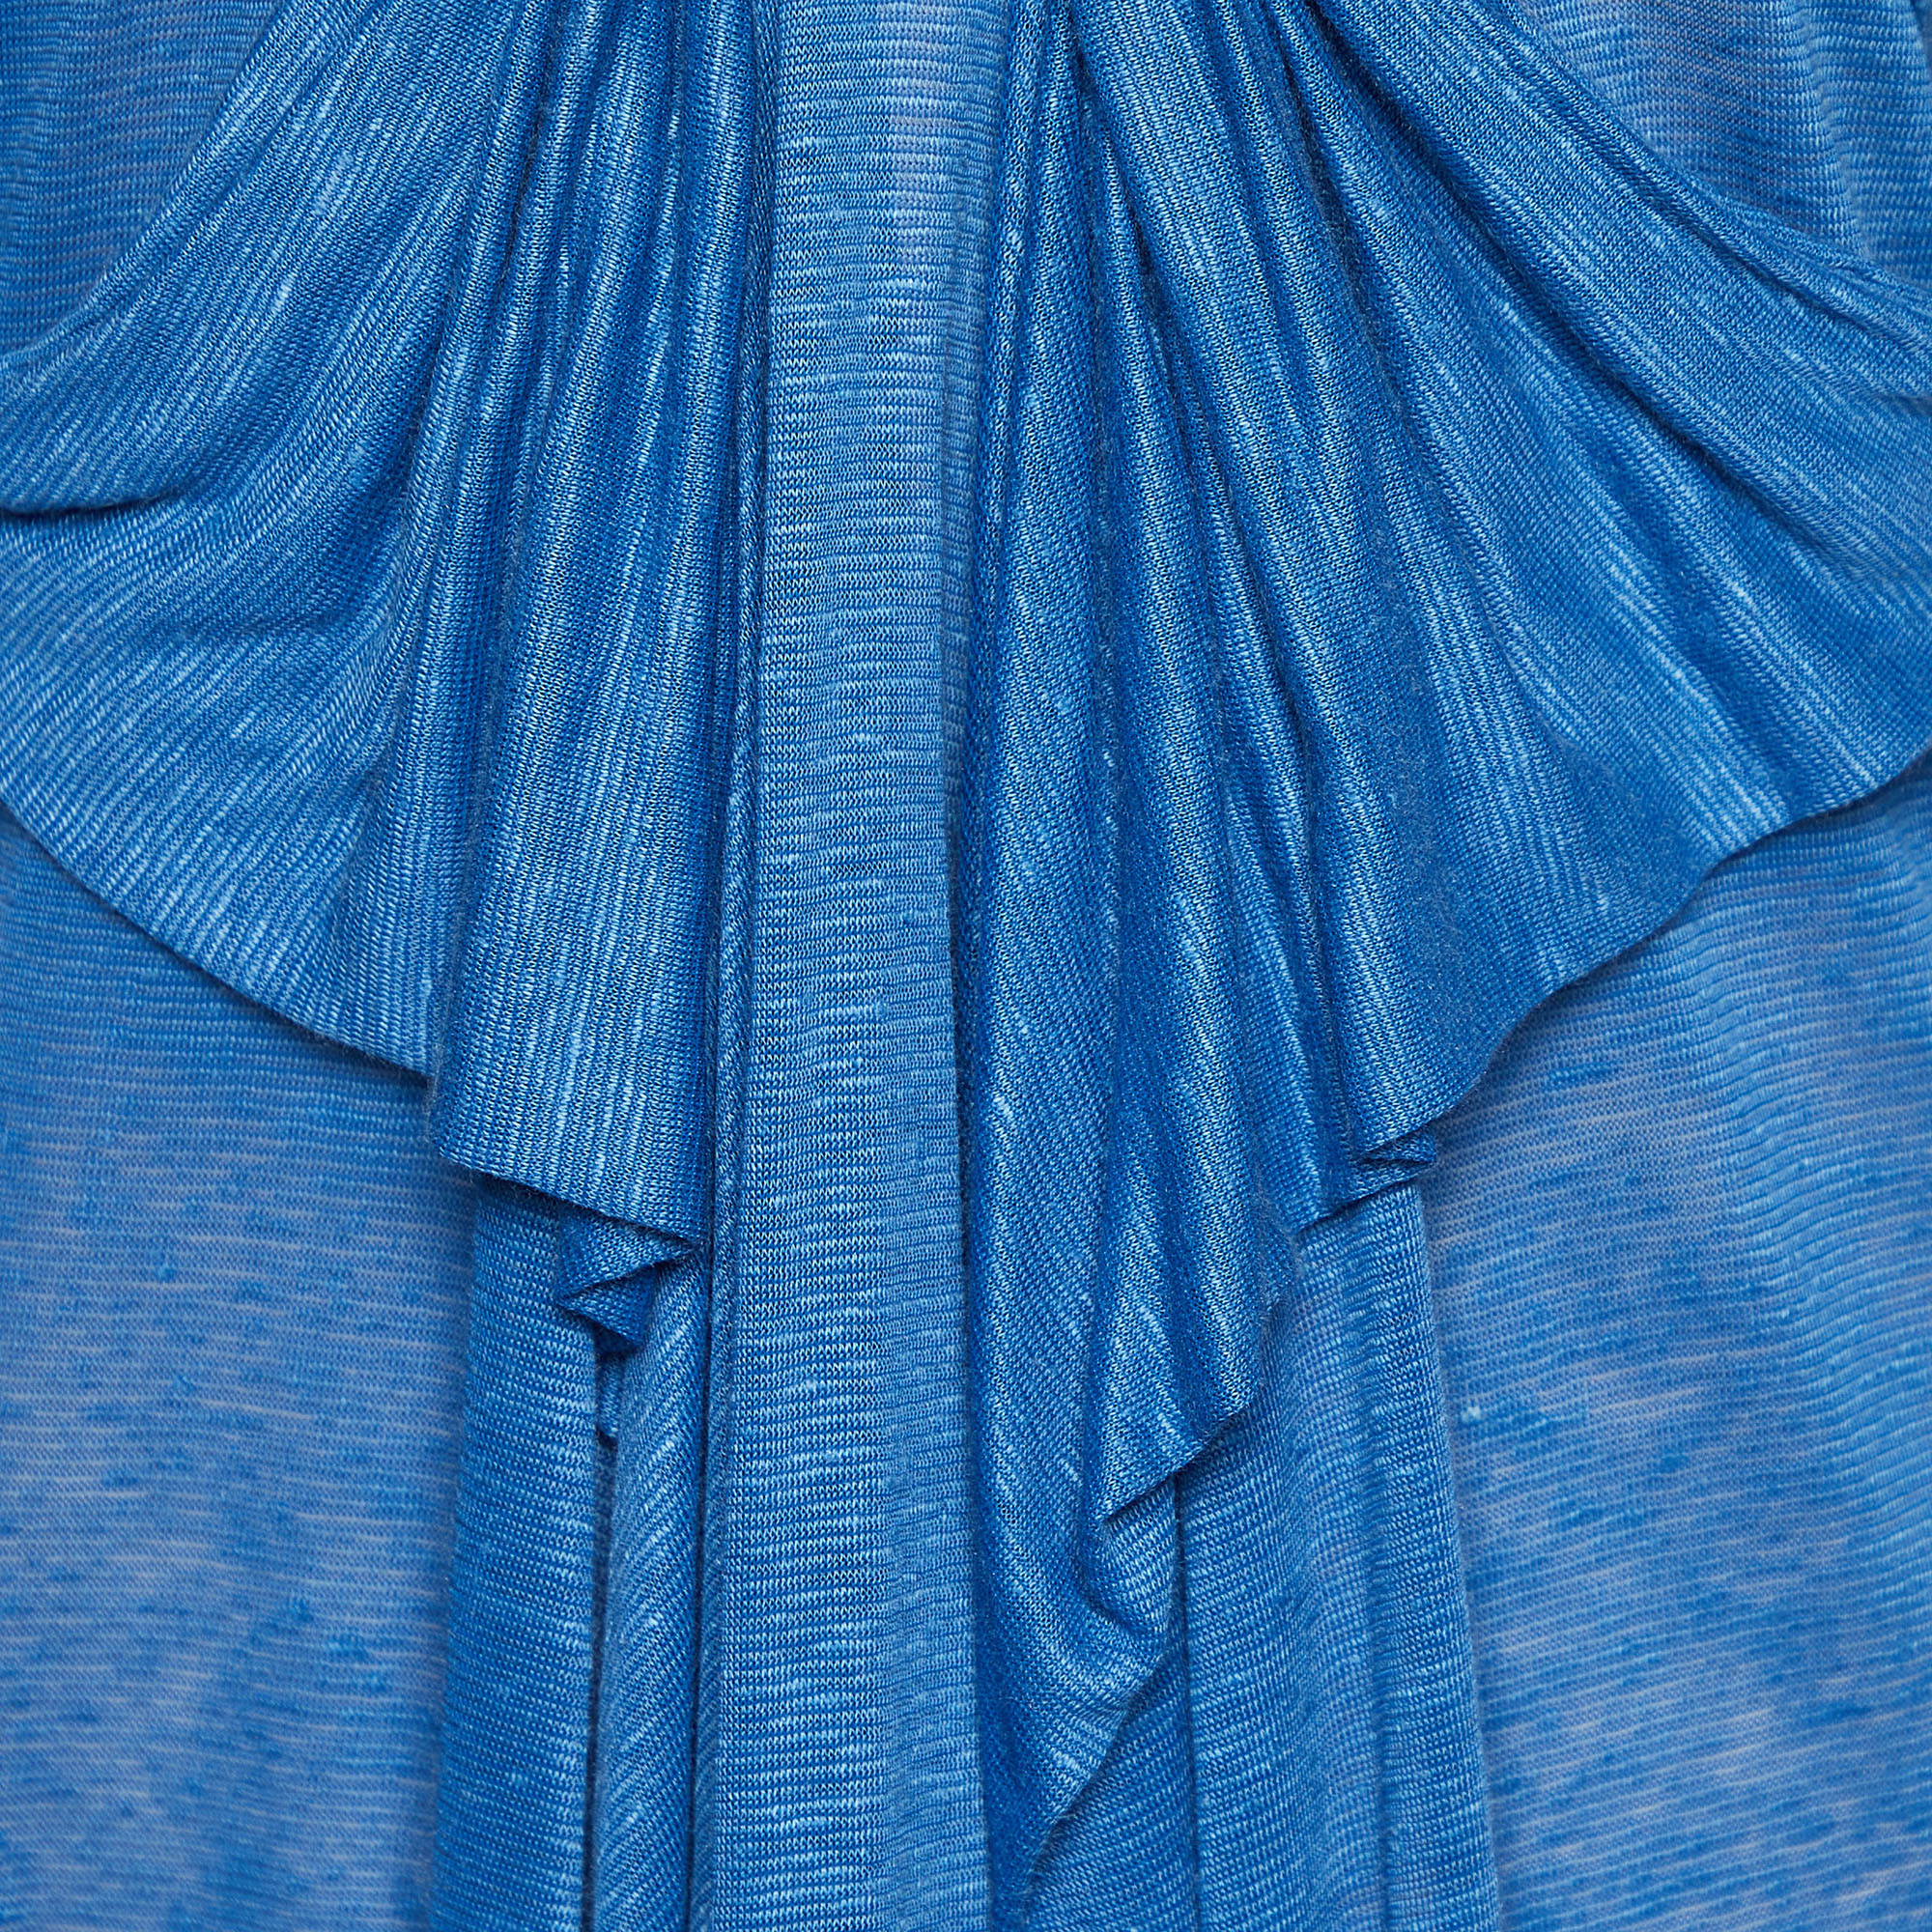 Stella McCartney Blue Linen Knit & Satin Hem Bow Detail Mini Dress M